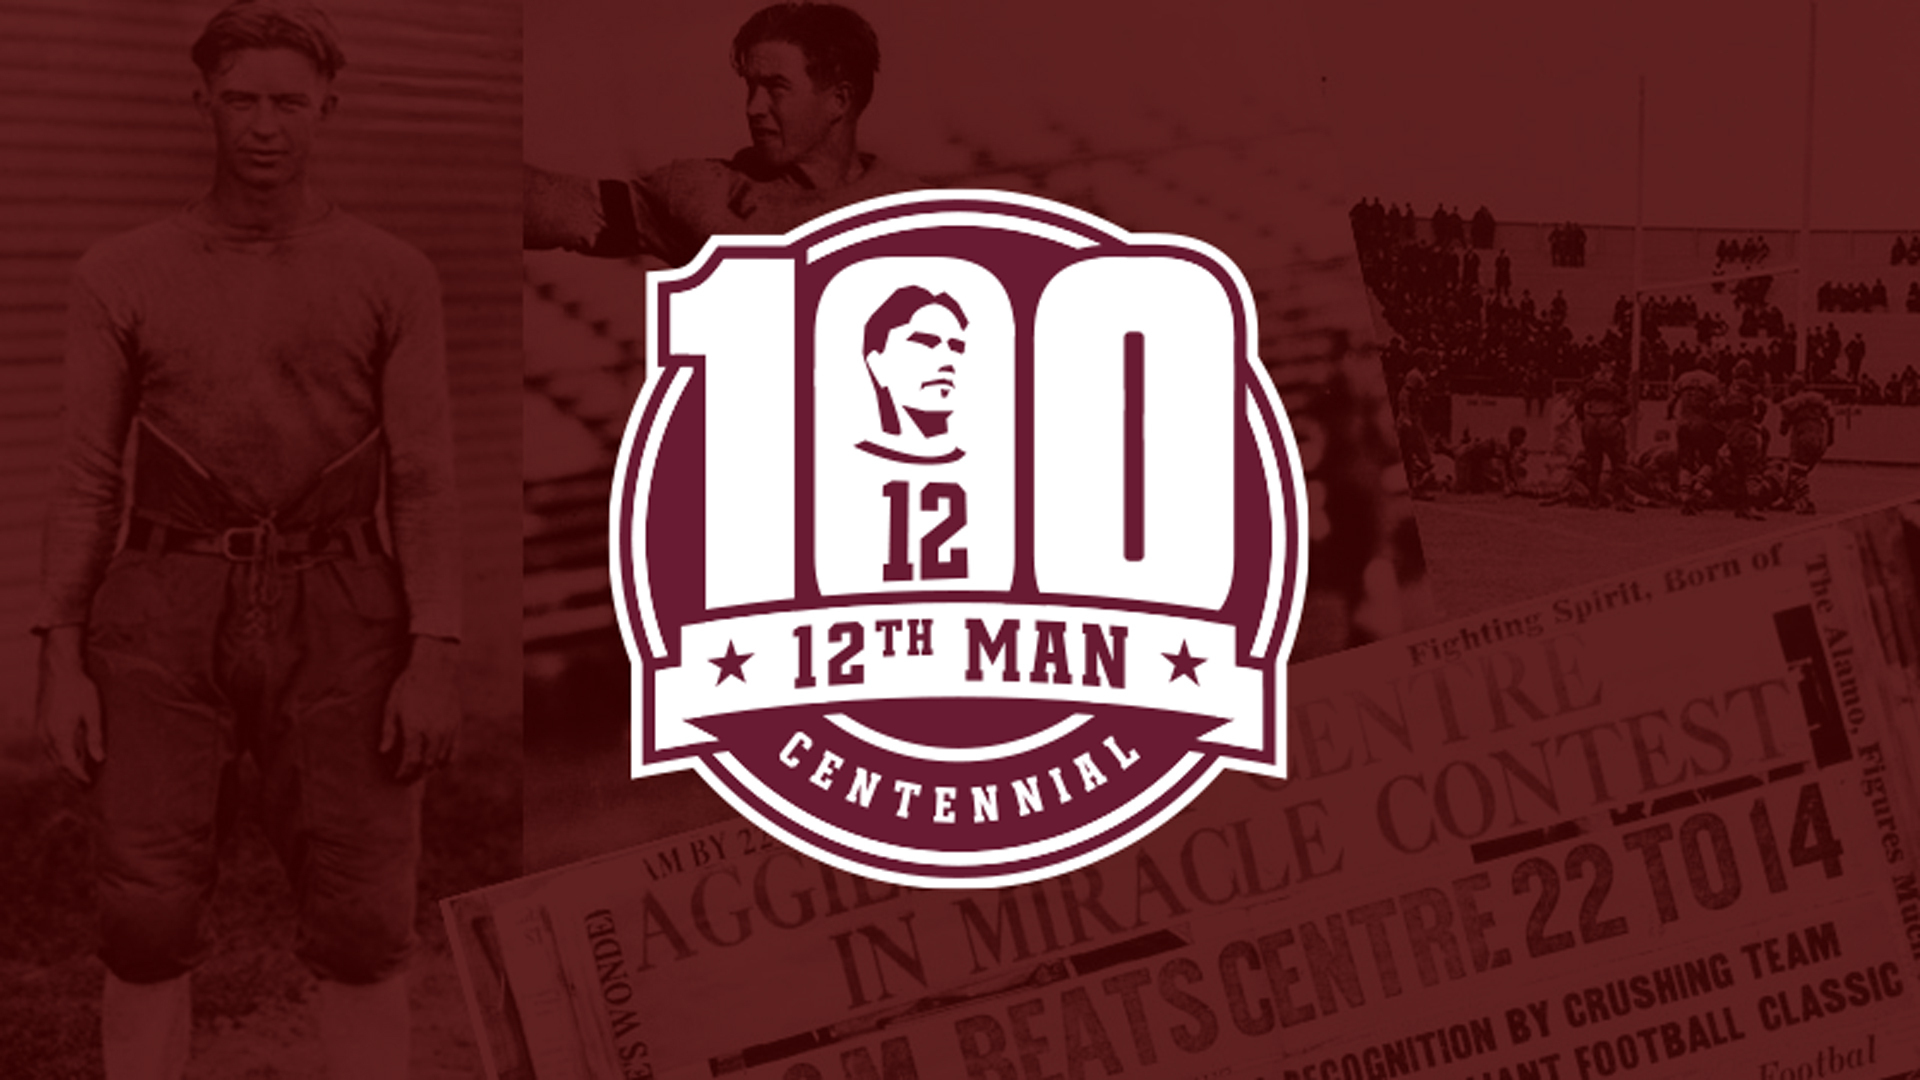 100 Centennial 12th Man